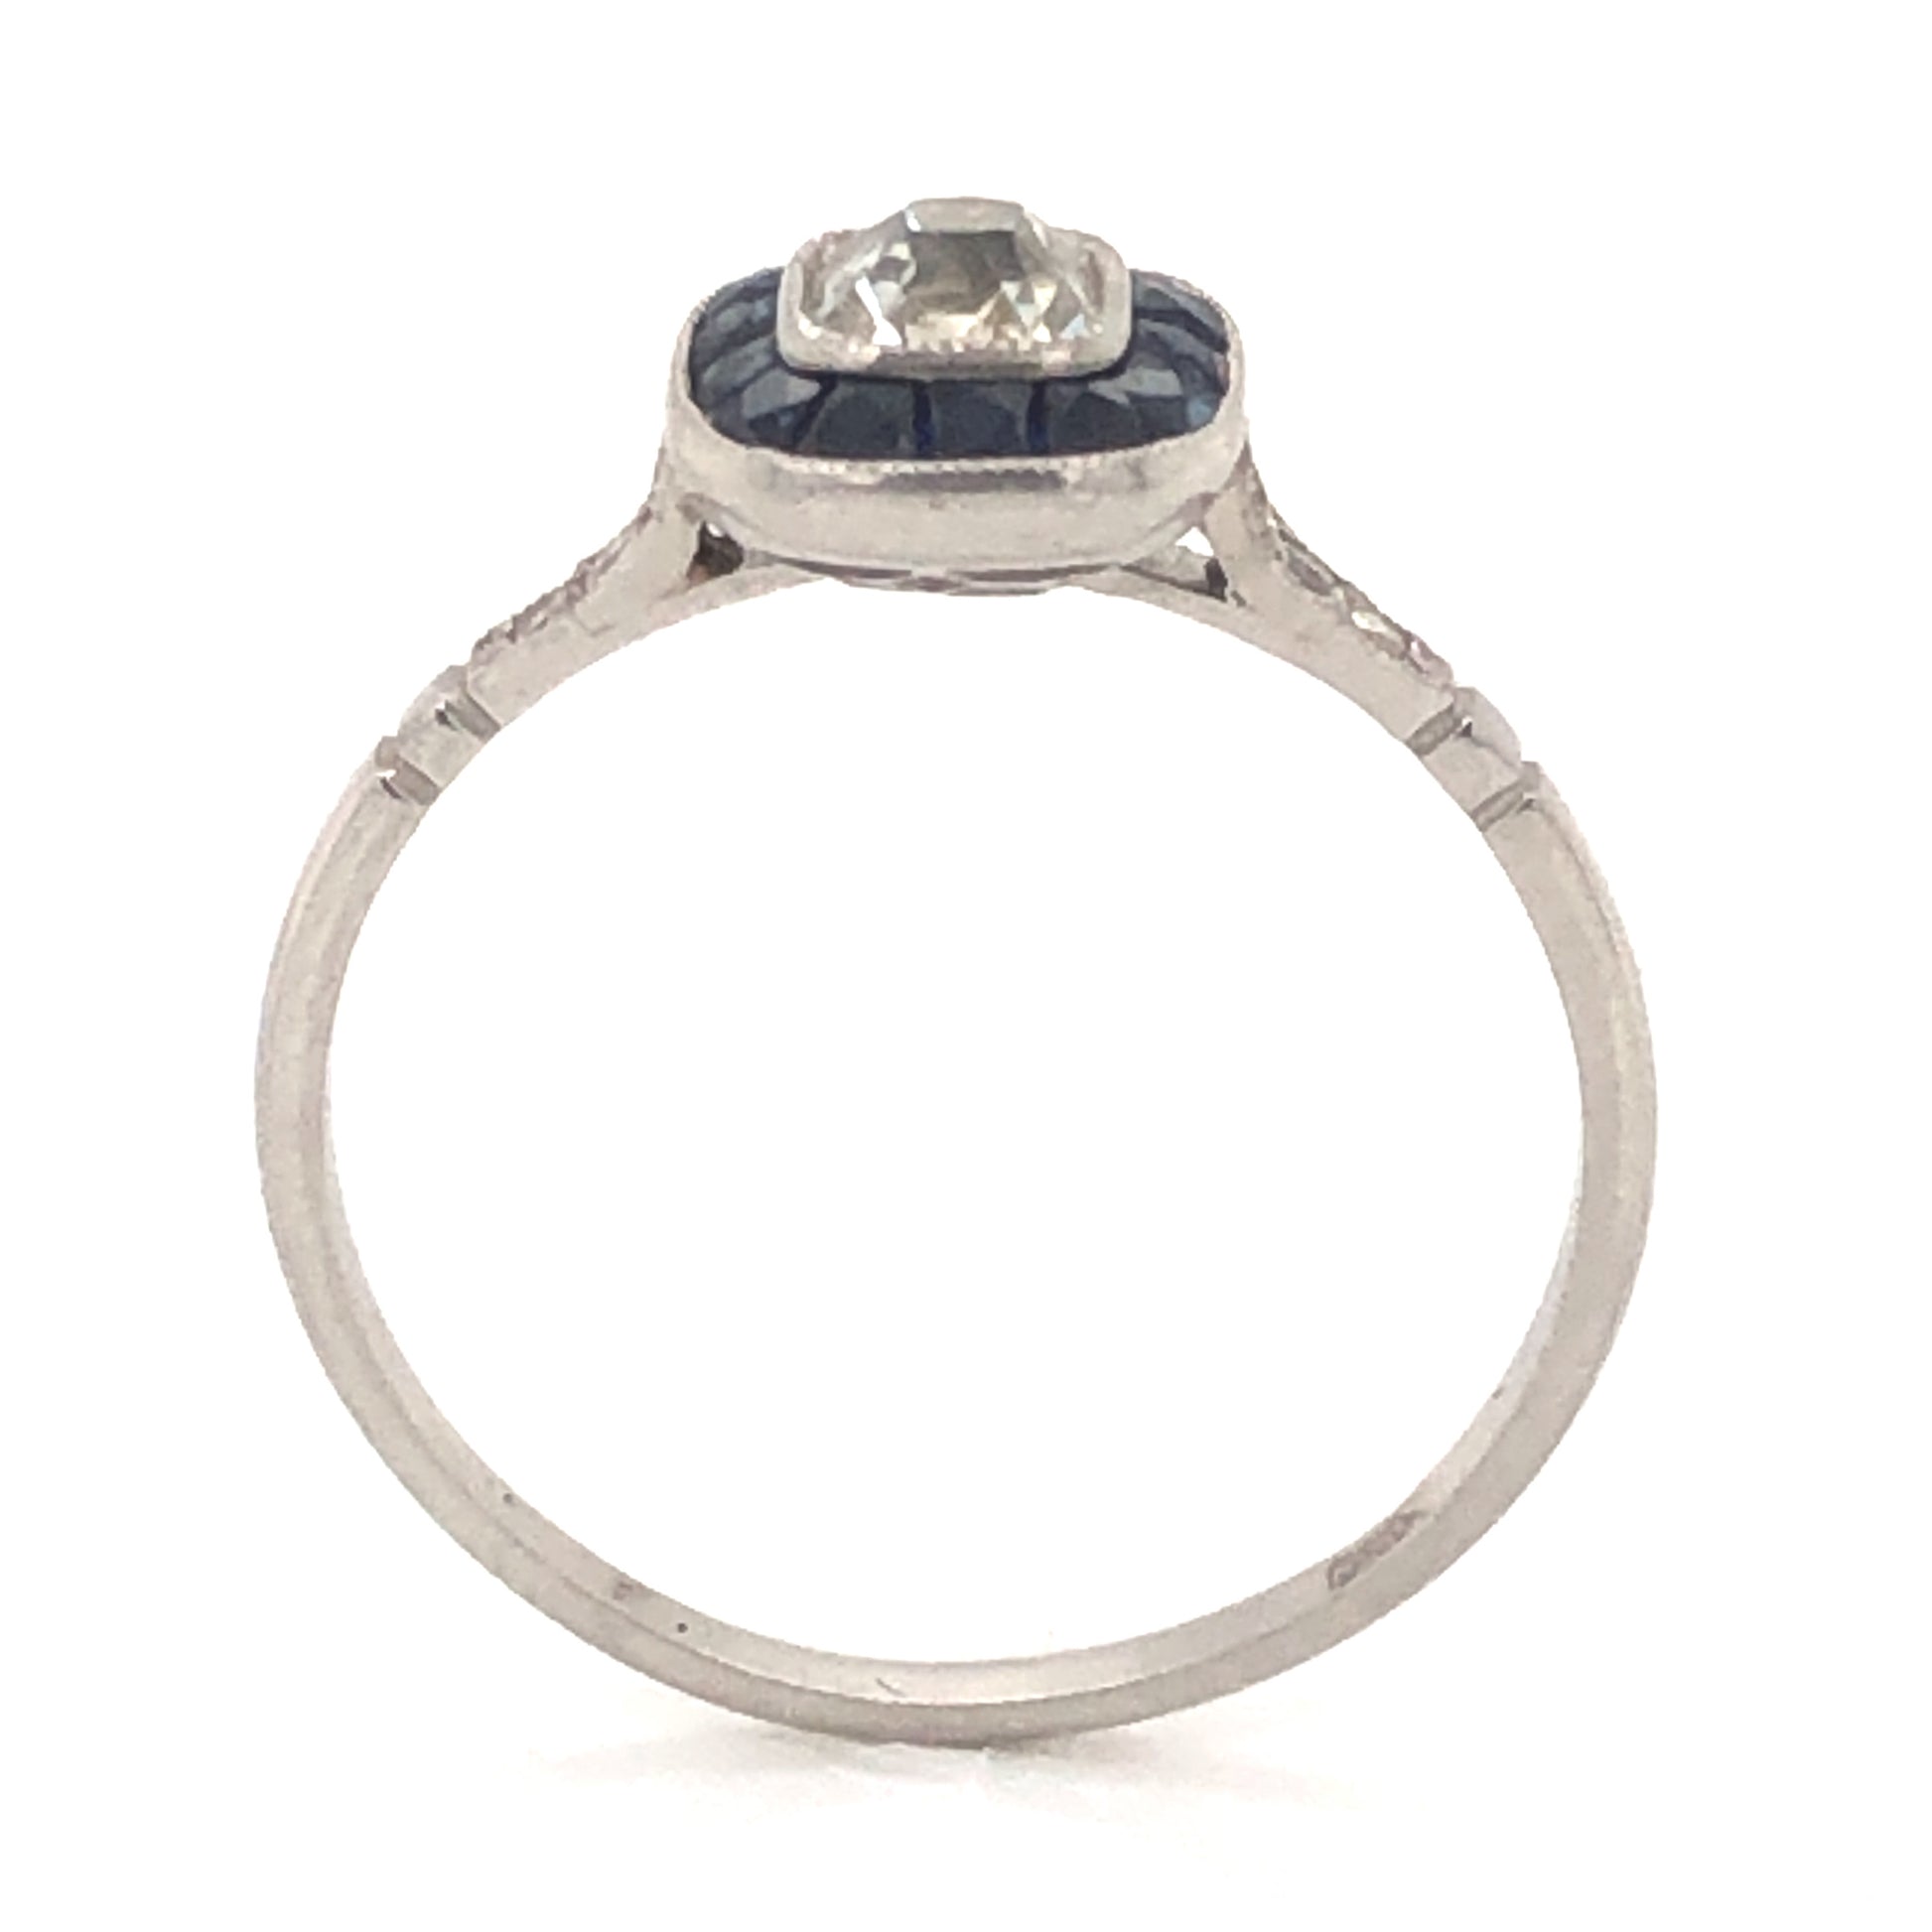 .40 Old Mine Cut Diamond & Sapphire Ring in Platinum